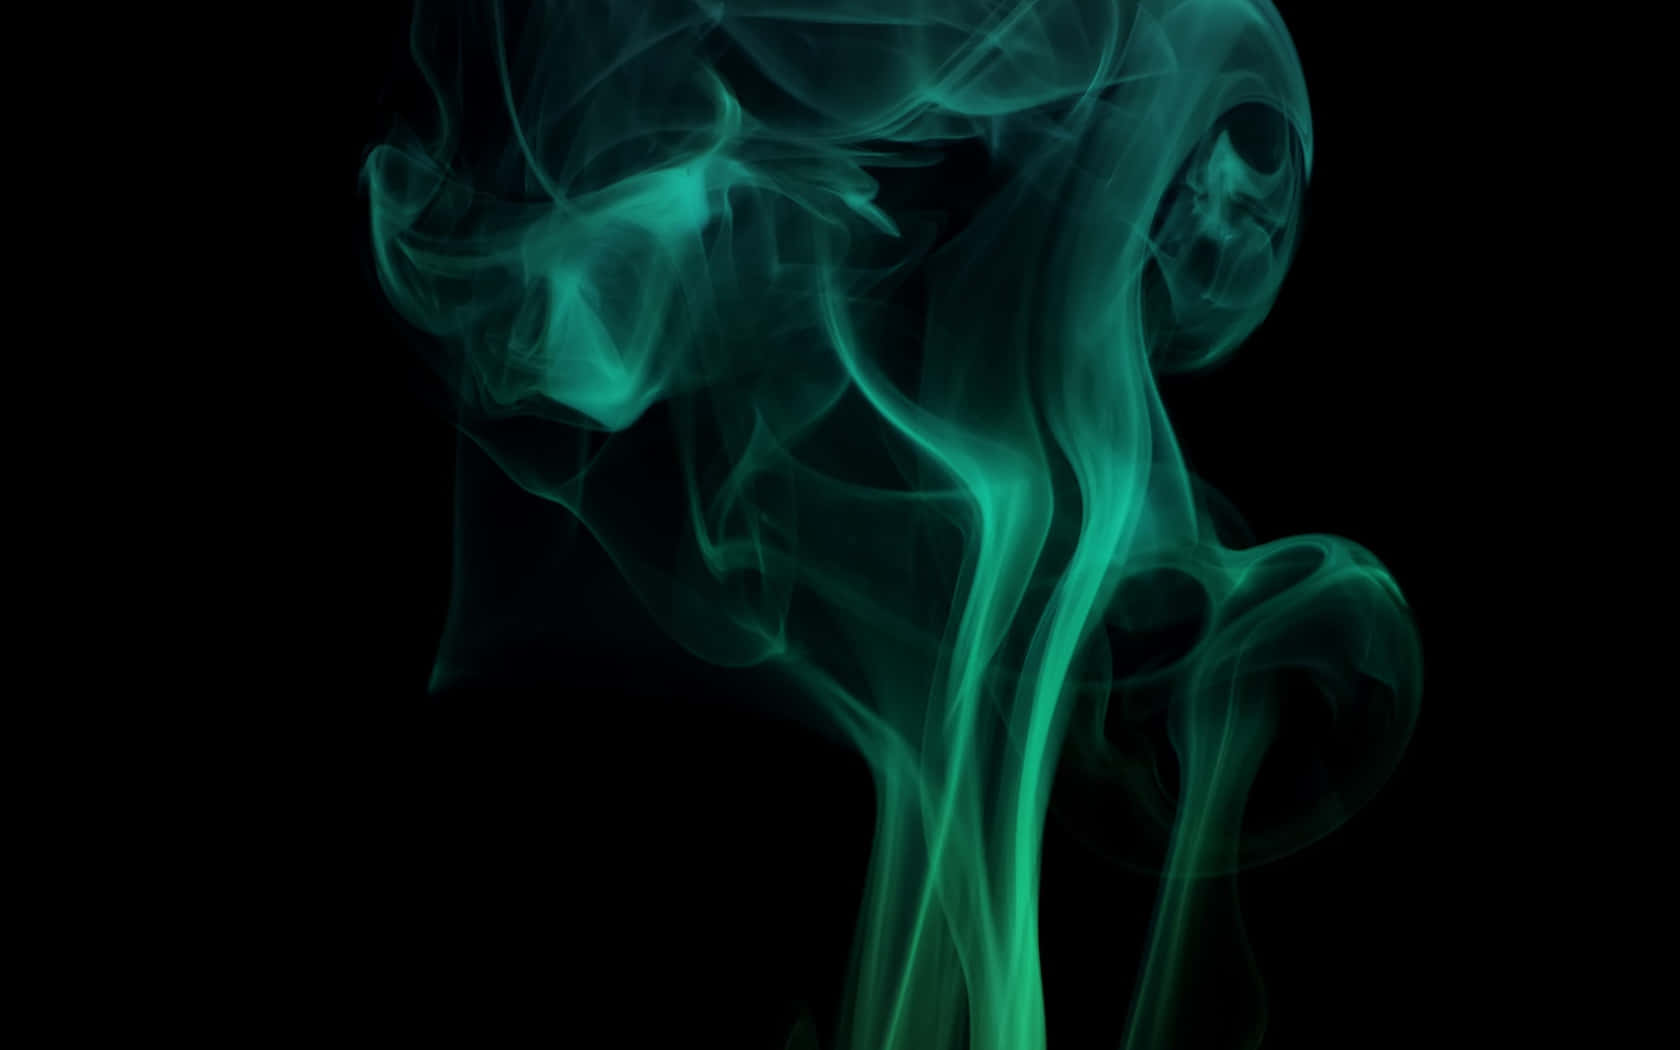 Smoke in green hues